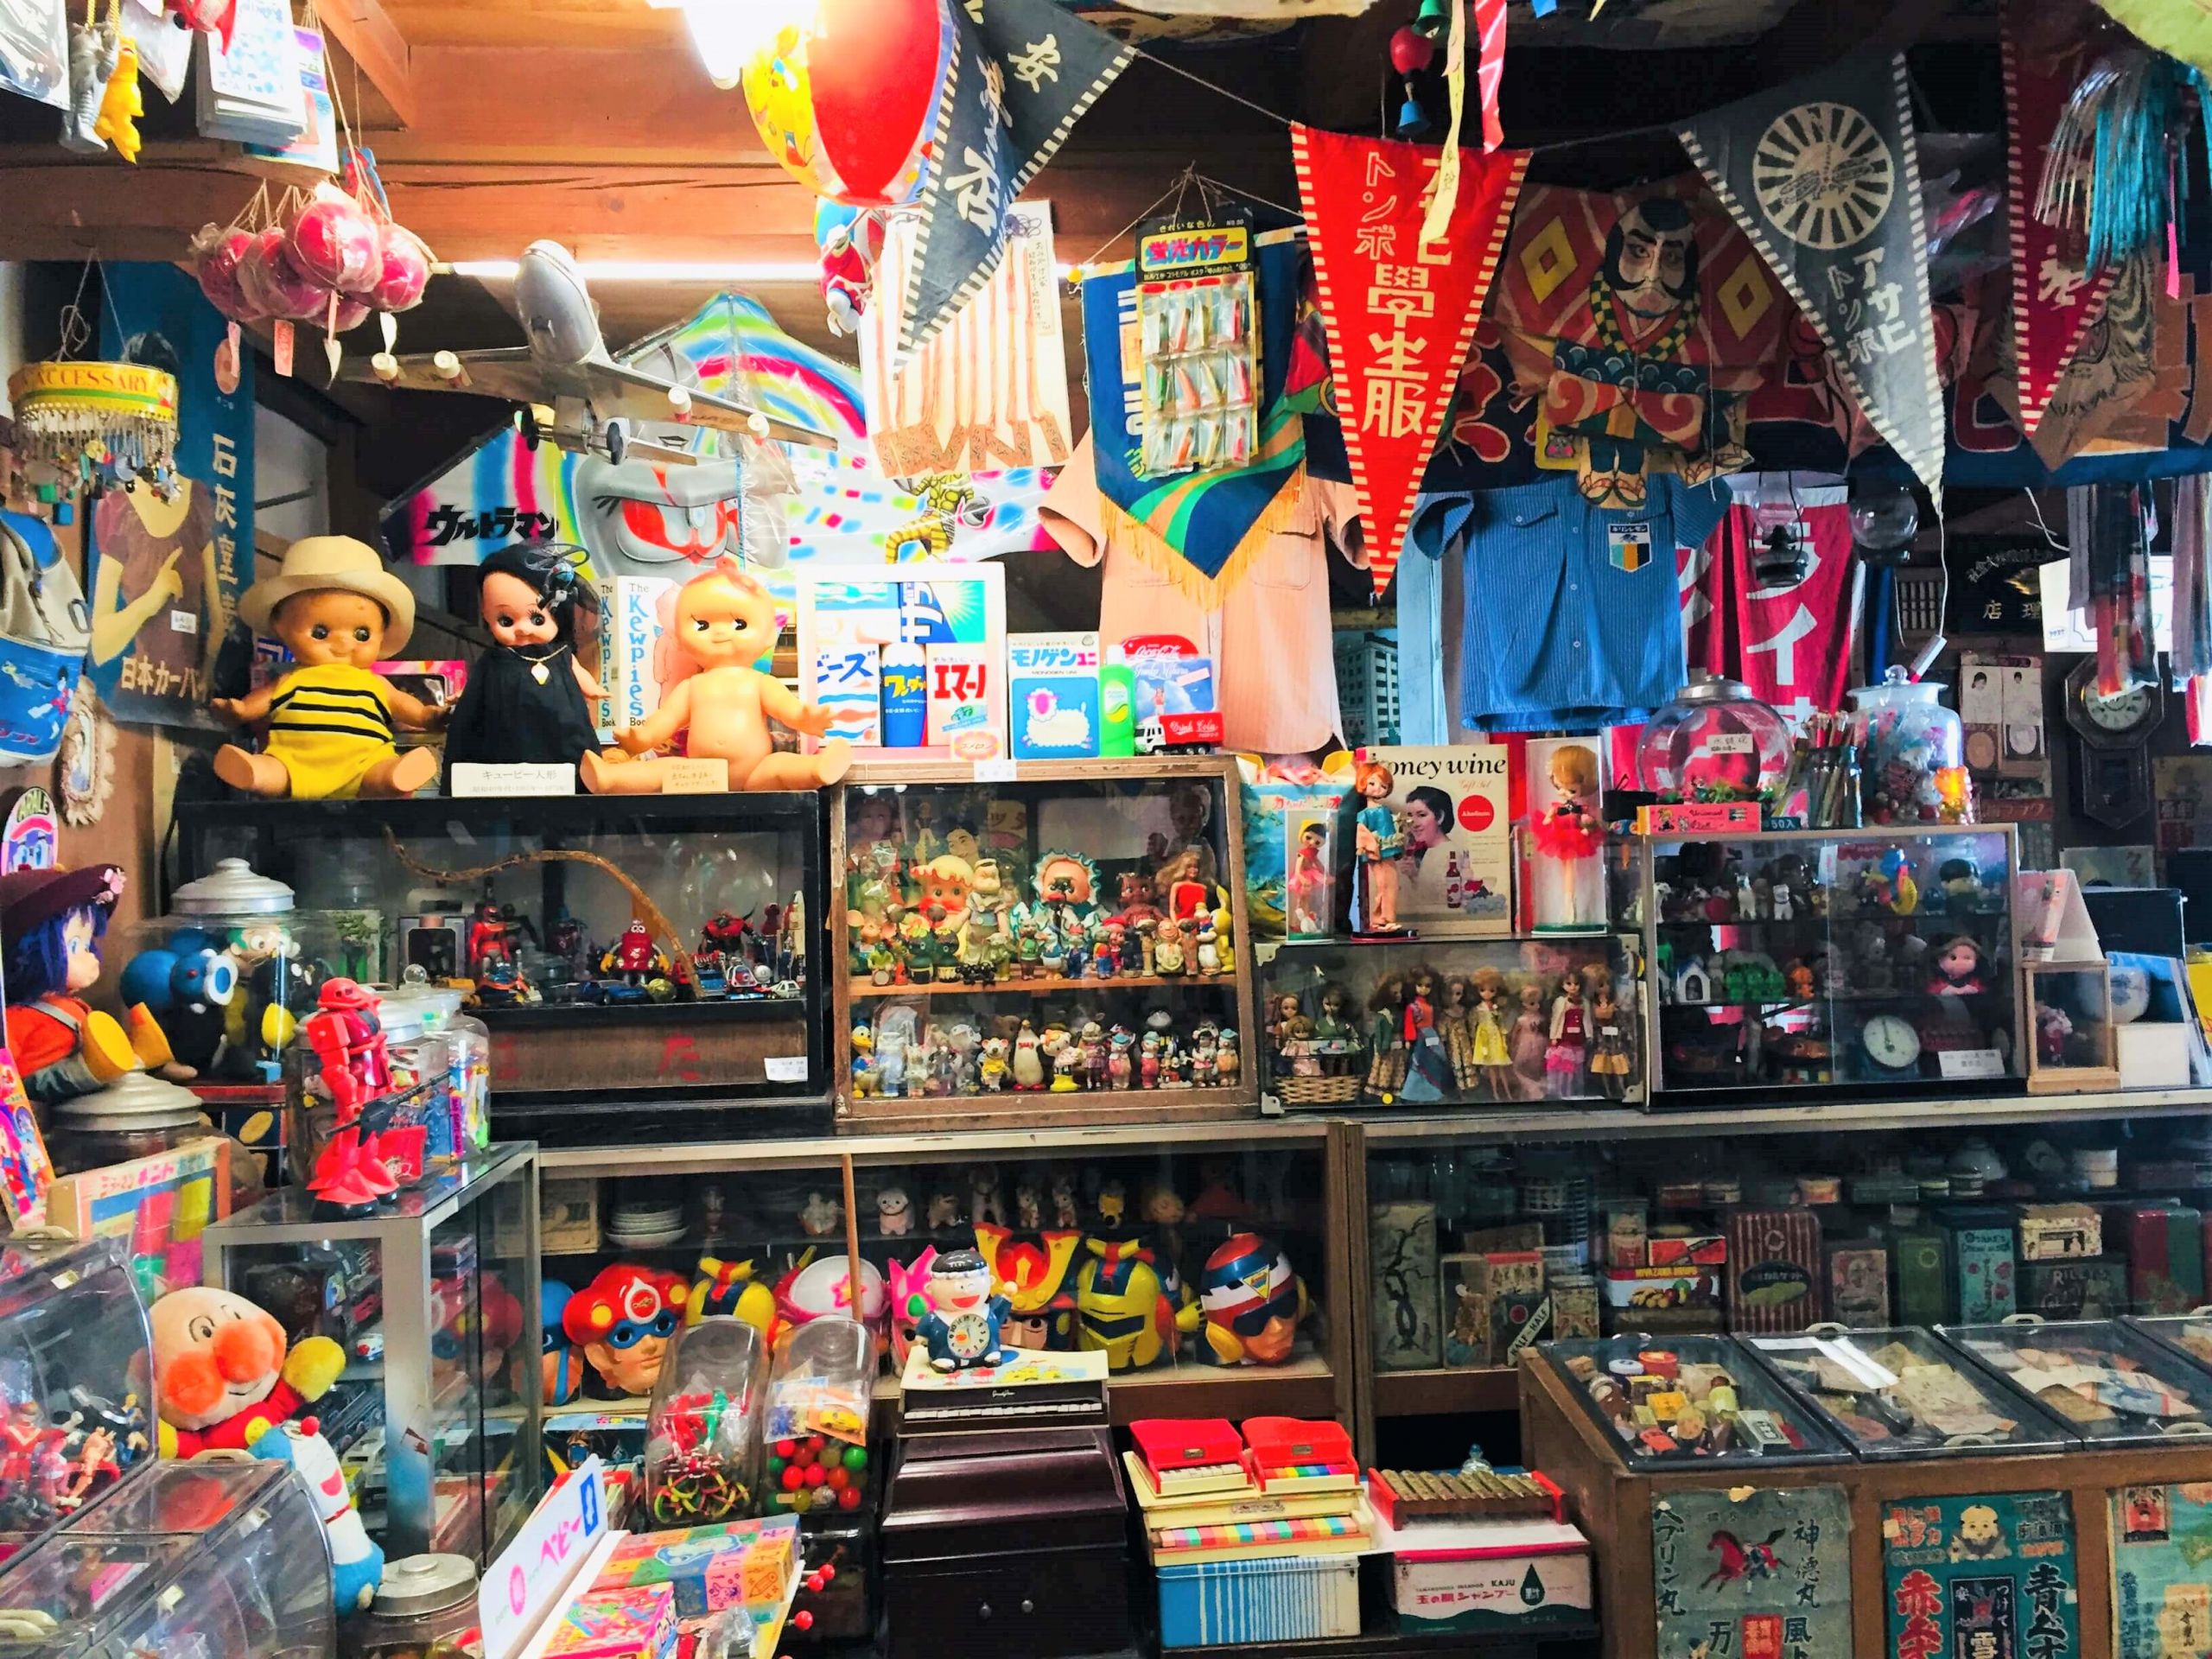 Old-fashioned Museum “Shiroishi doll warehouse”